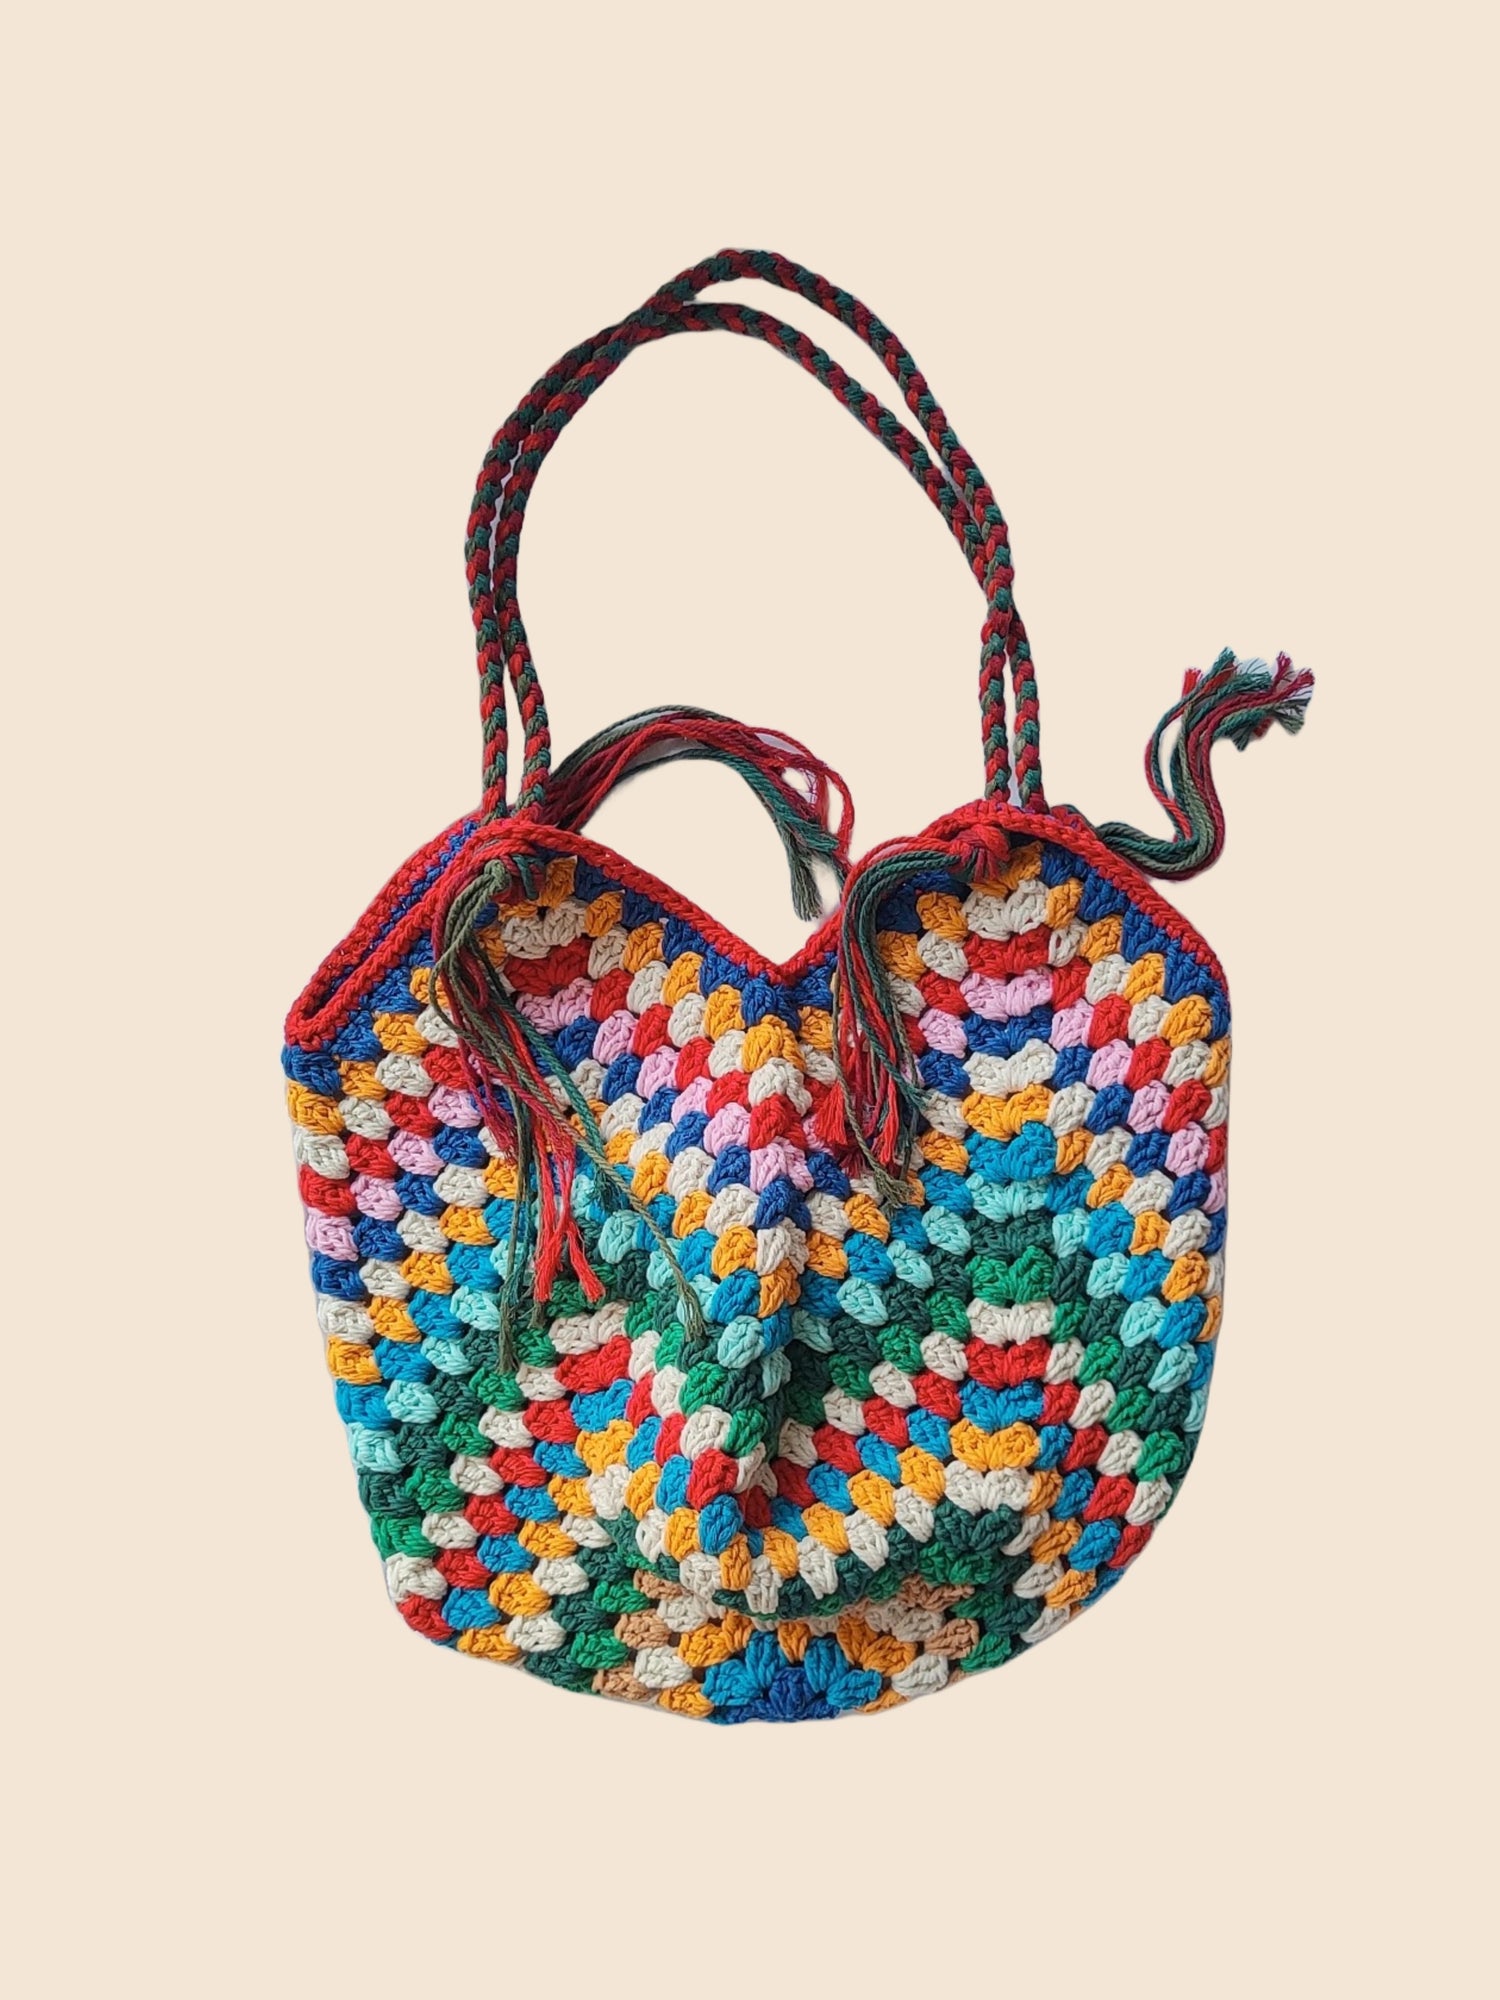 Handmade Crochet Rainbow Hobo Bag